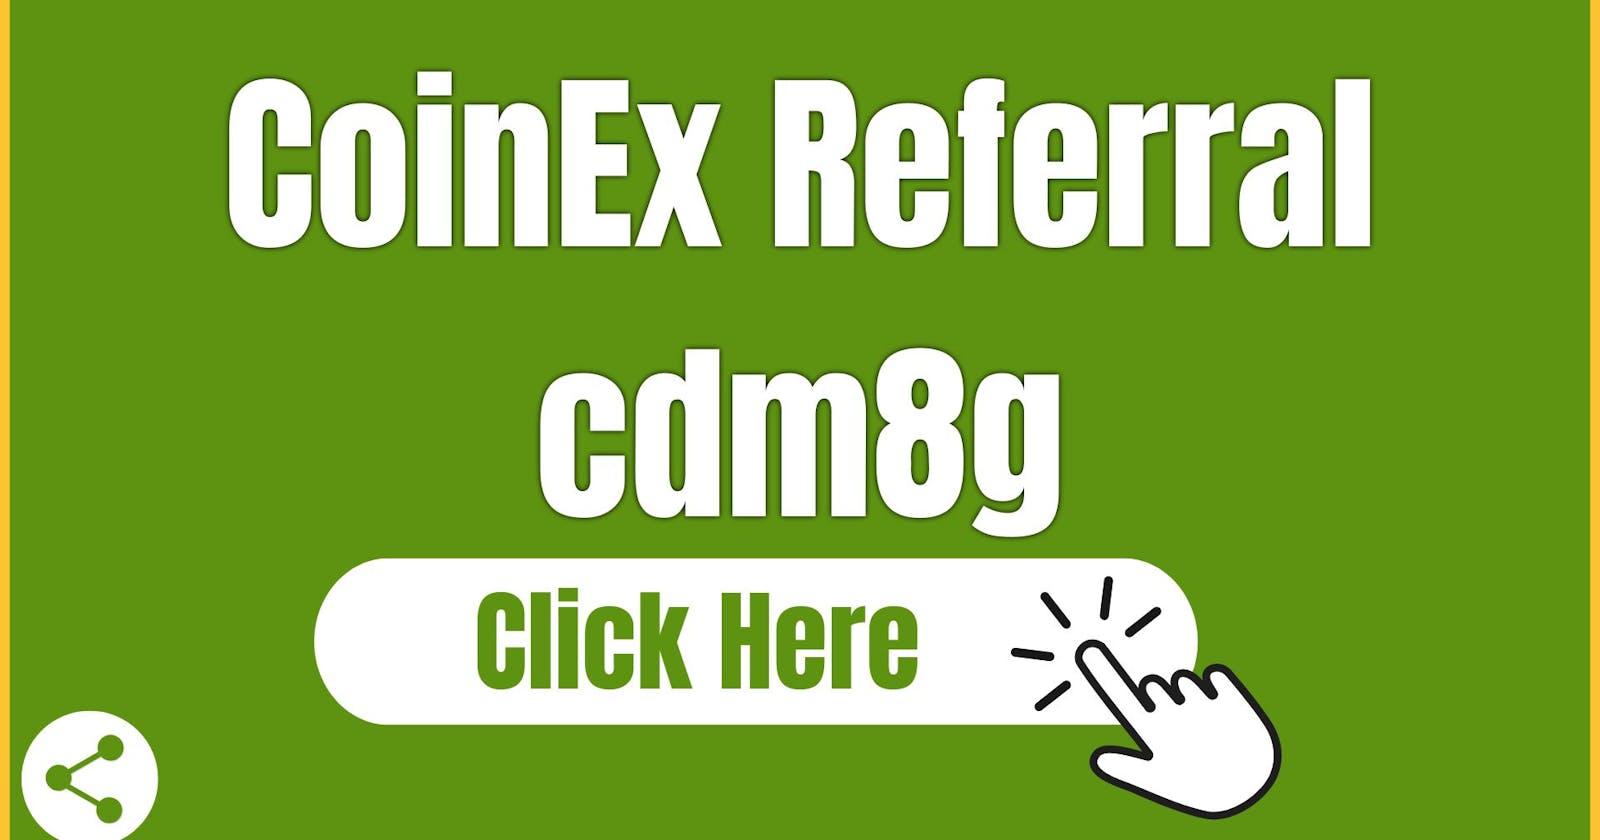 How To Buy On CoinEx | CoinEx Pro Invitation Code | Code: cdm8g | BestCoinShare✔